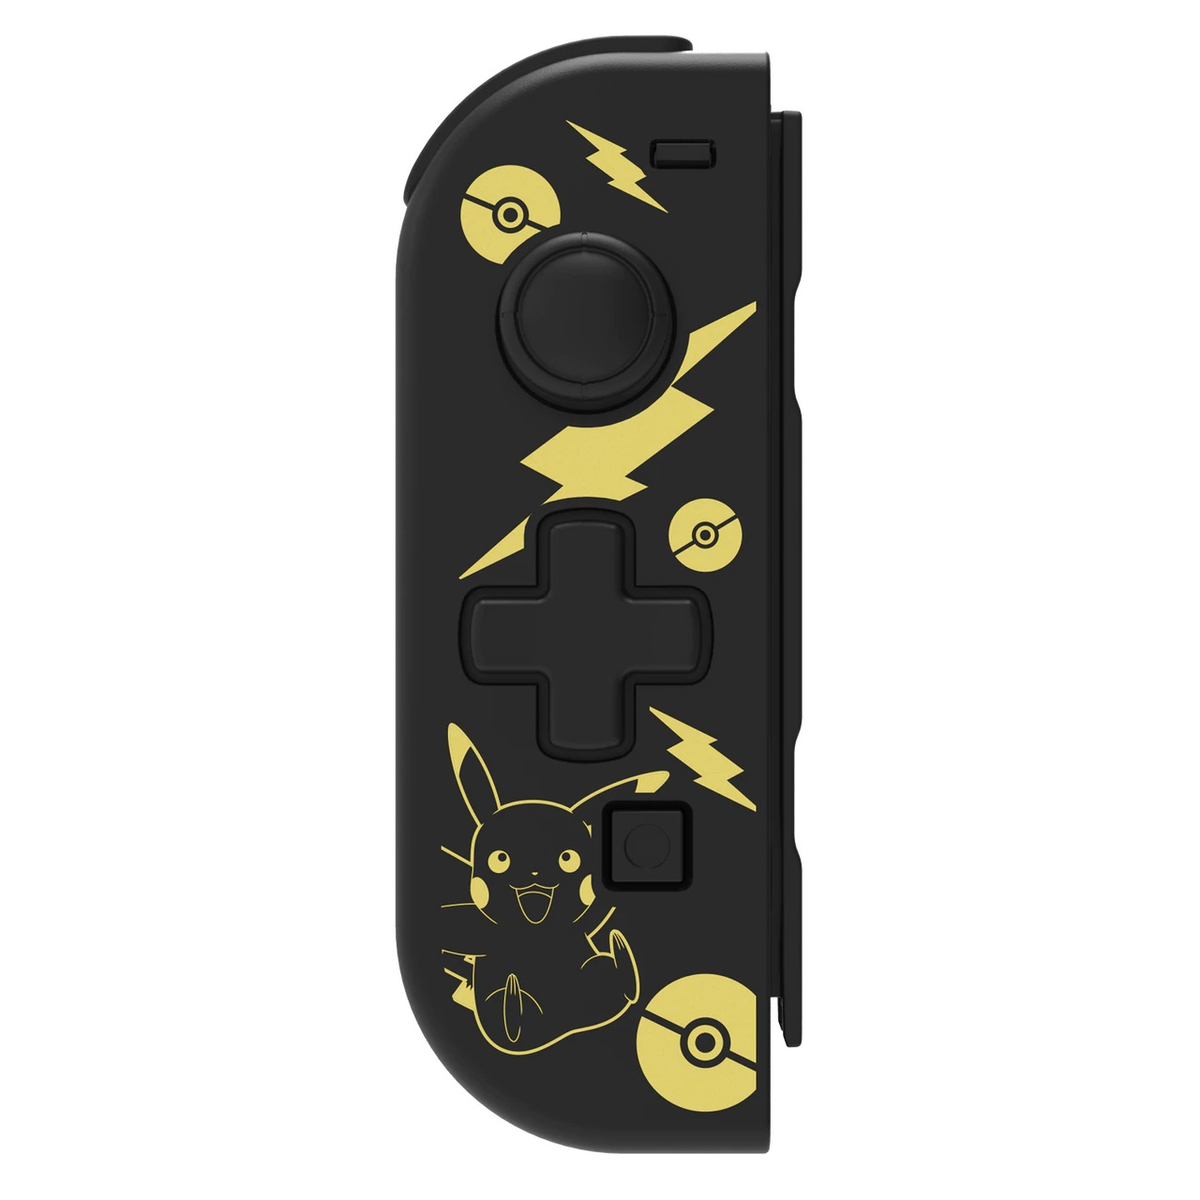 D-Pad Controller (Pikachu Black & Gold)